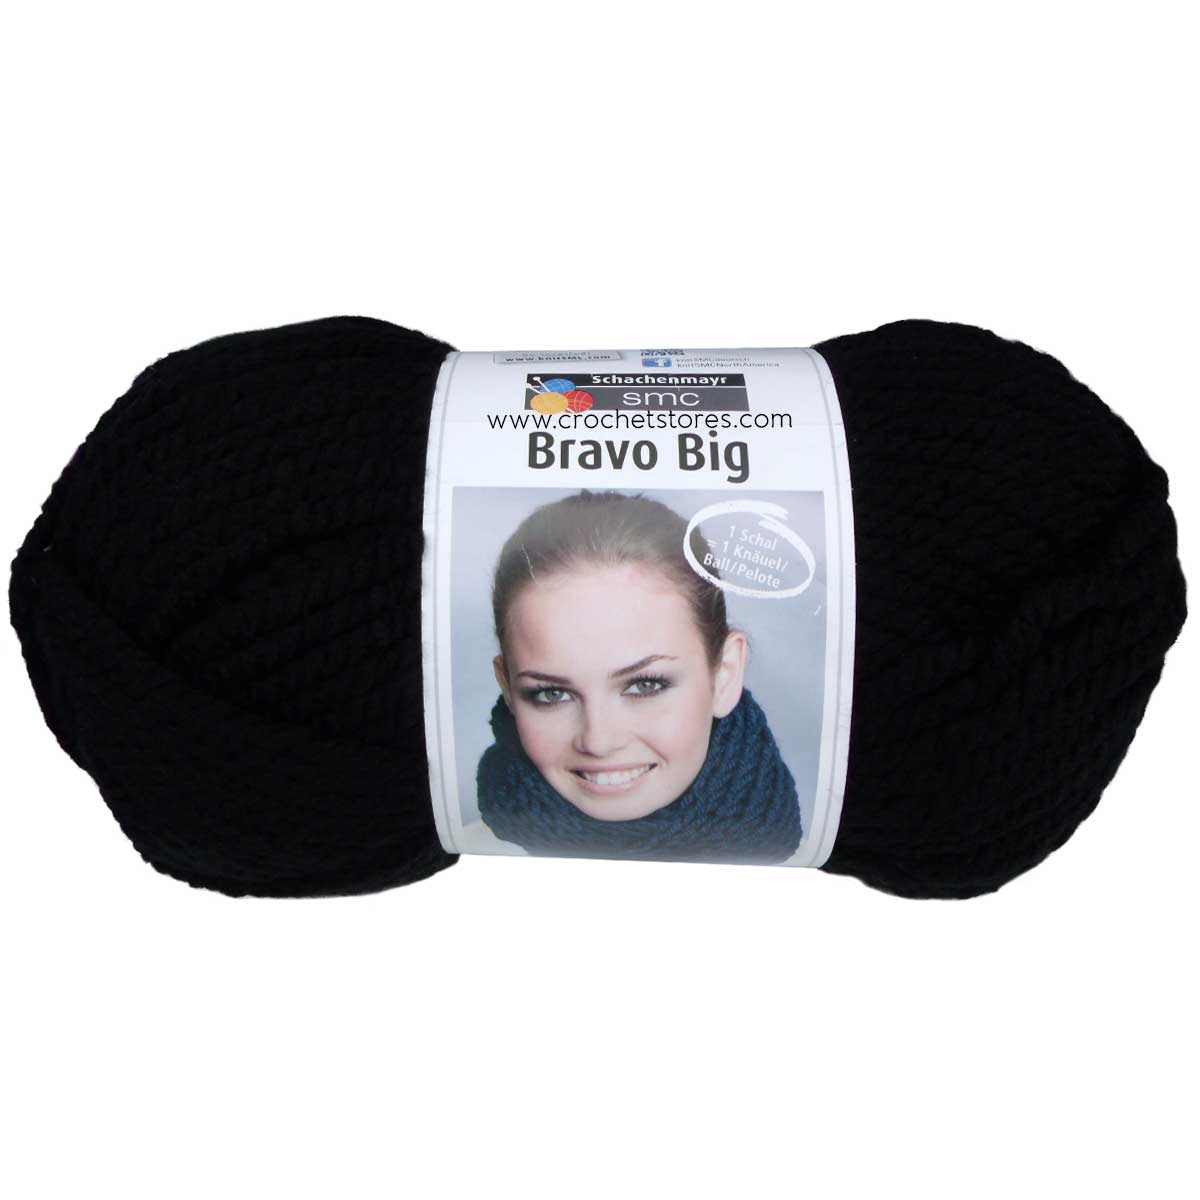 BRAVO BIG - Crochetstores9807705-1994082700833276